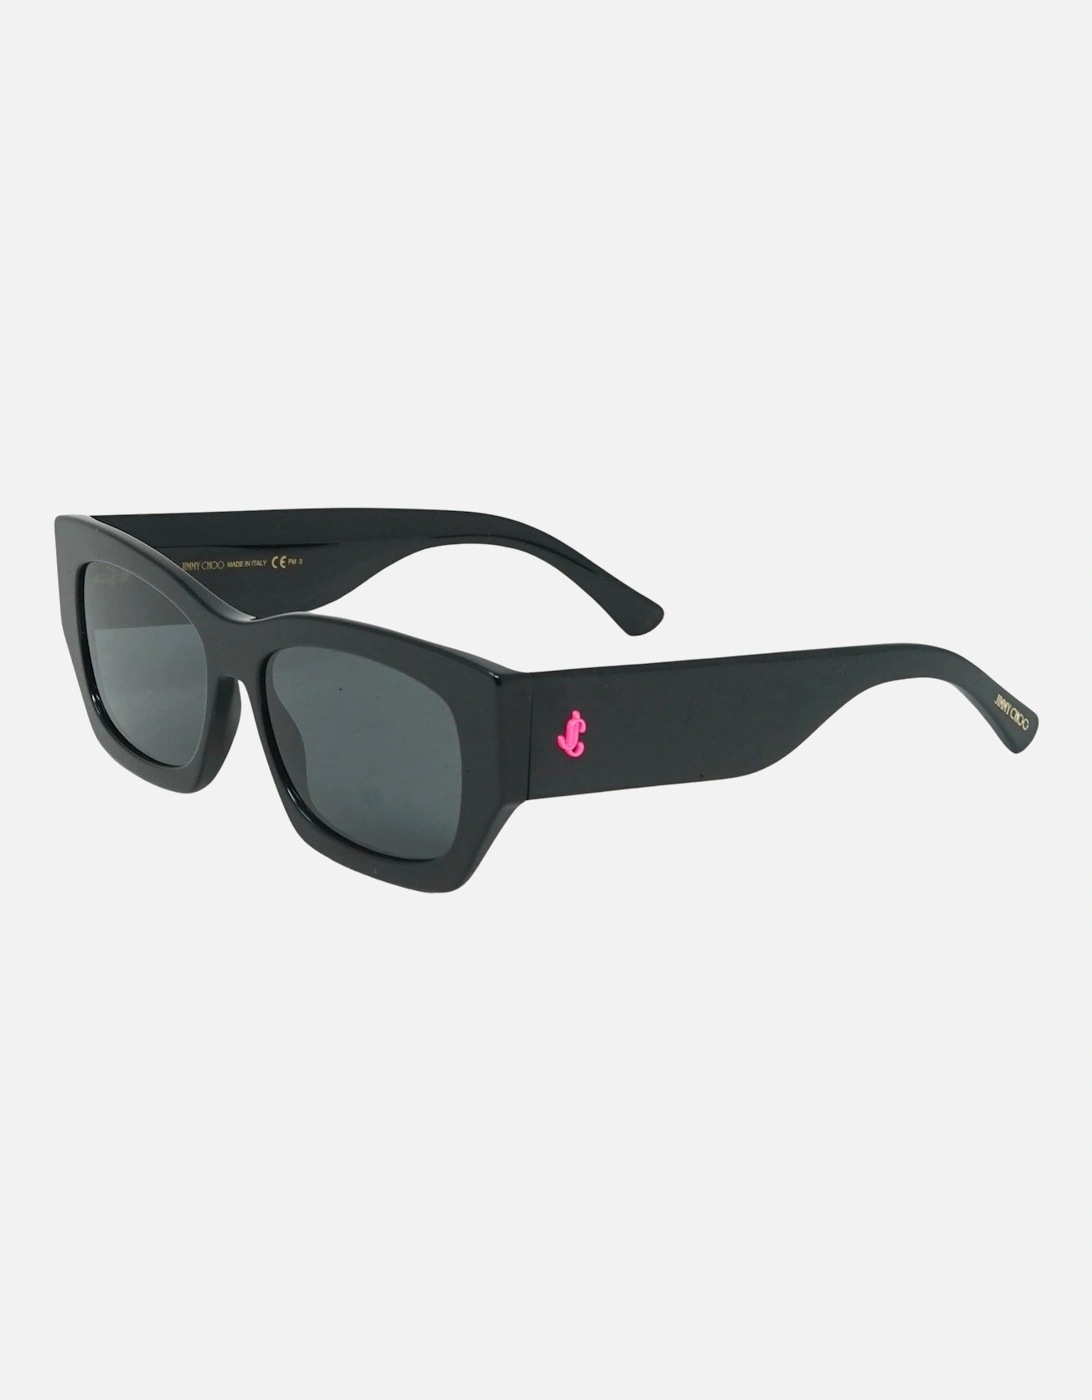 Cami 807 Black Sunglasses